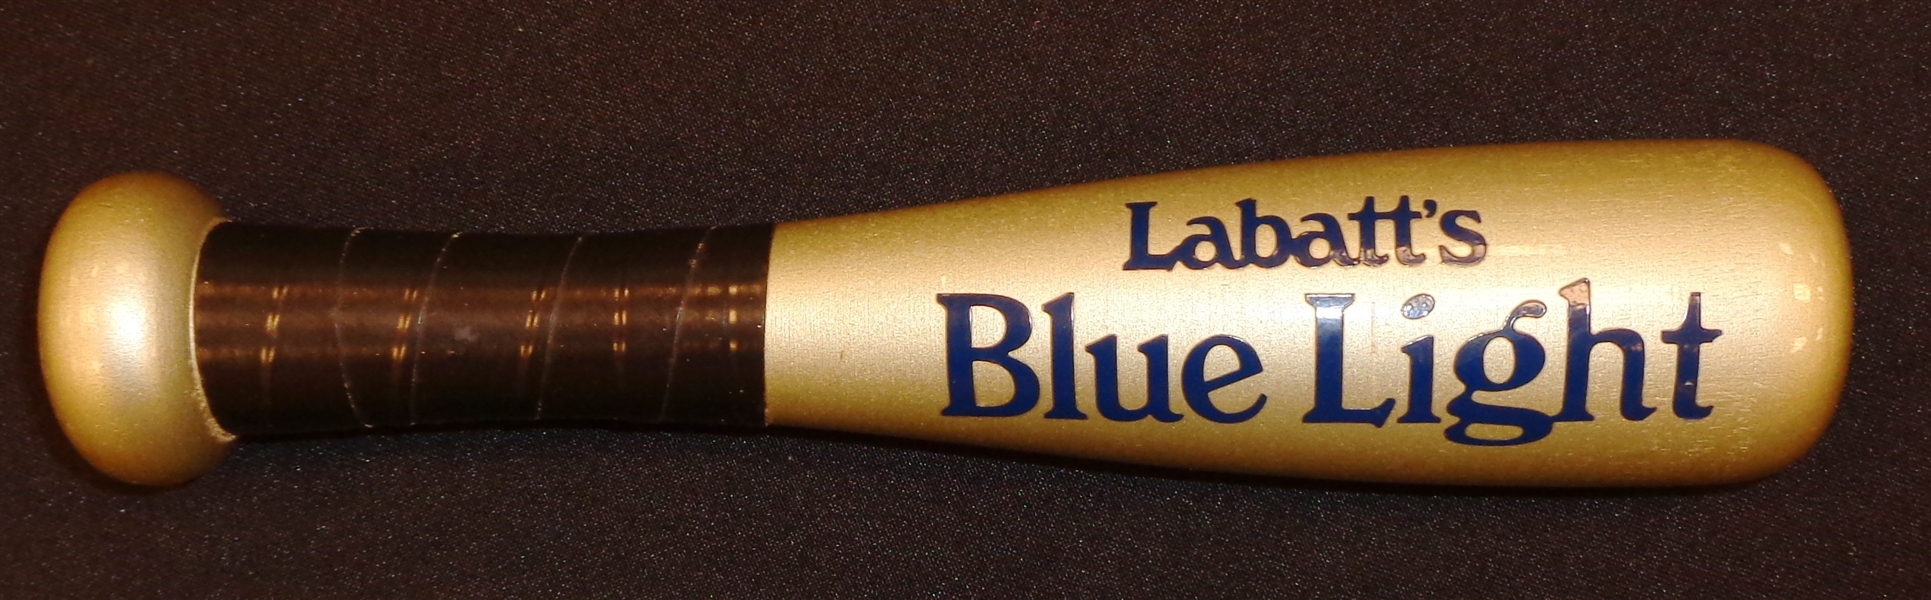 Labatt Blue Light Bat Shaped Beer Tap Handle